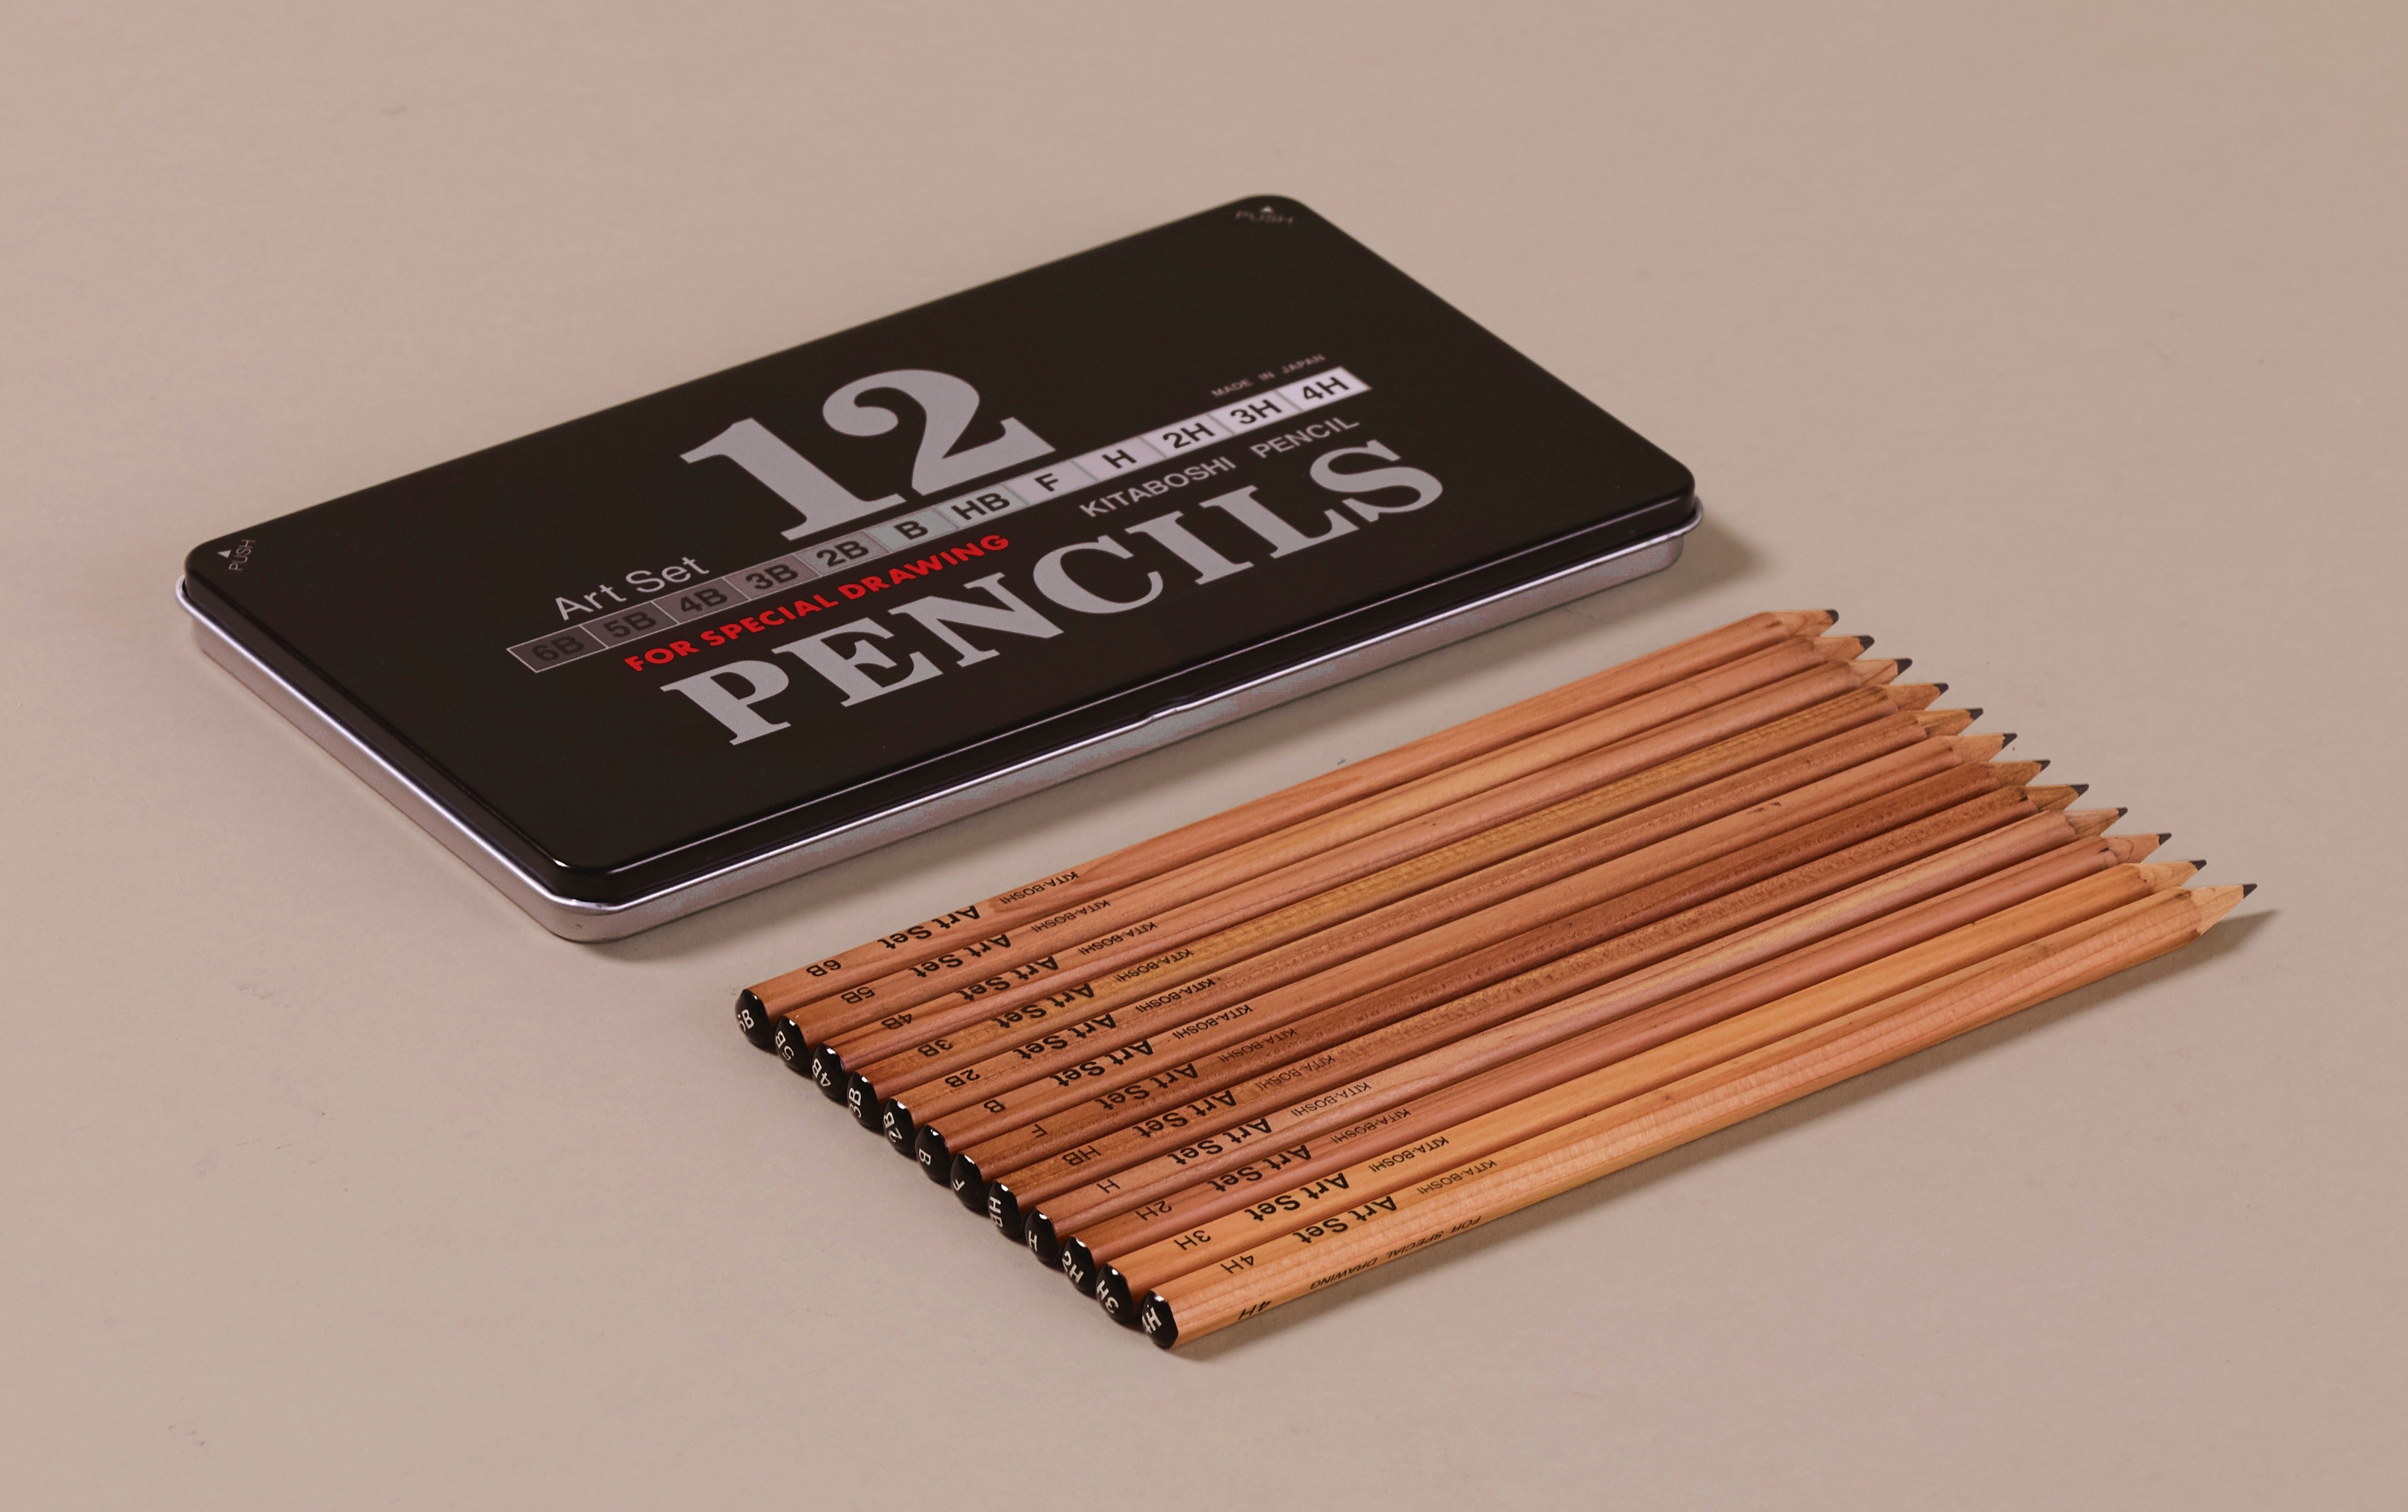 Classic: Adult's Pencil Log Custom Set - Shop kitaboshi-pencil